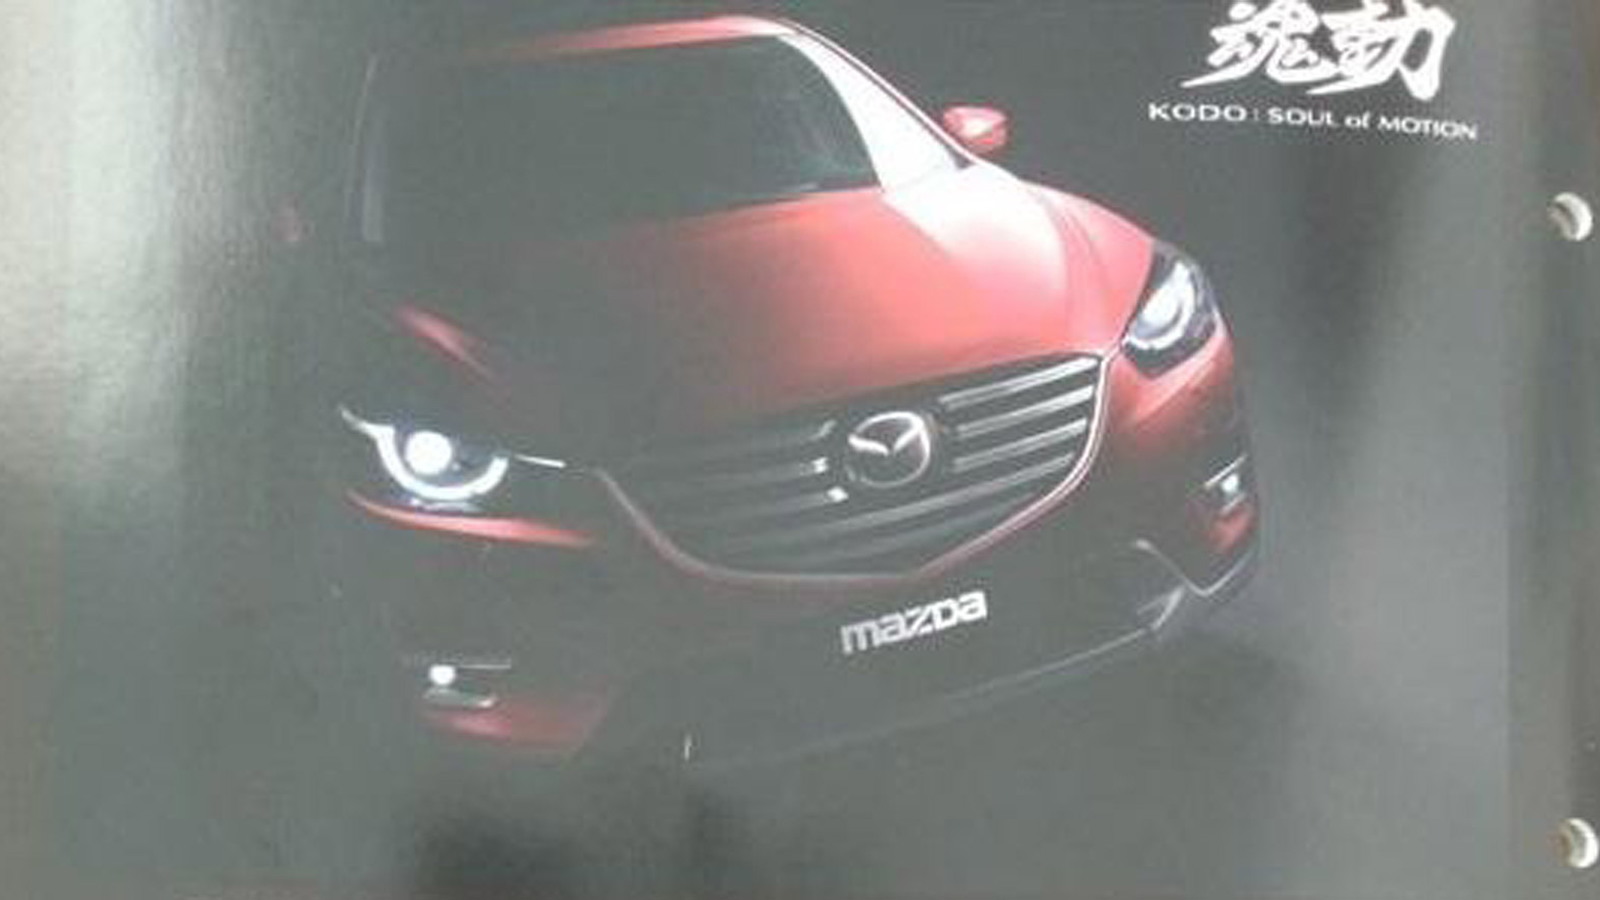 2016 Mazda CX-5 leaked via brochure scans (Image via Worldscoop forums)